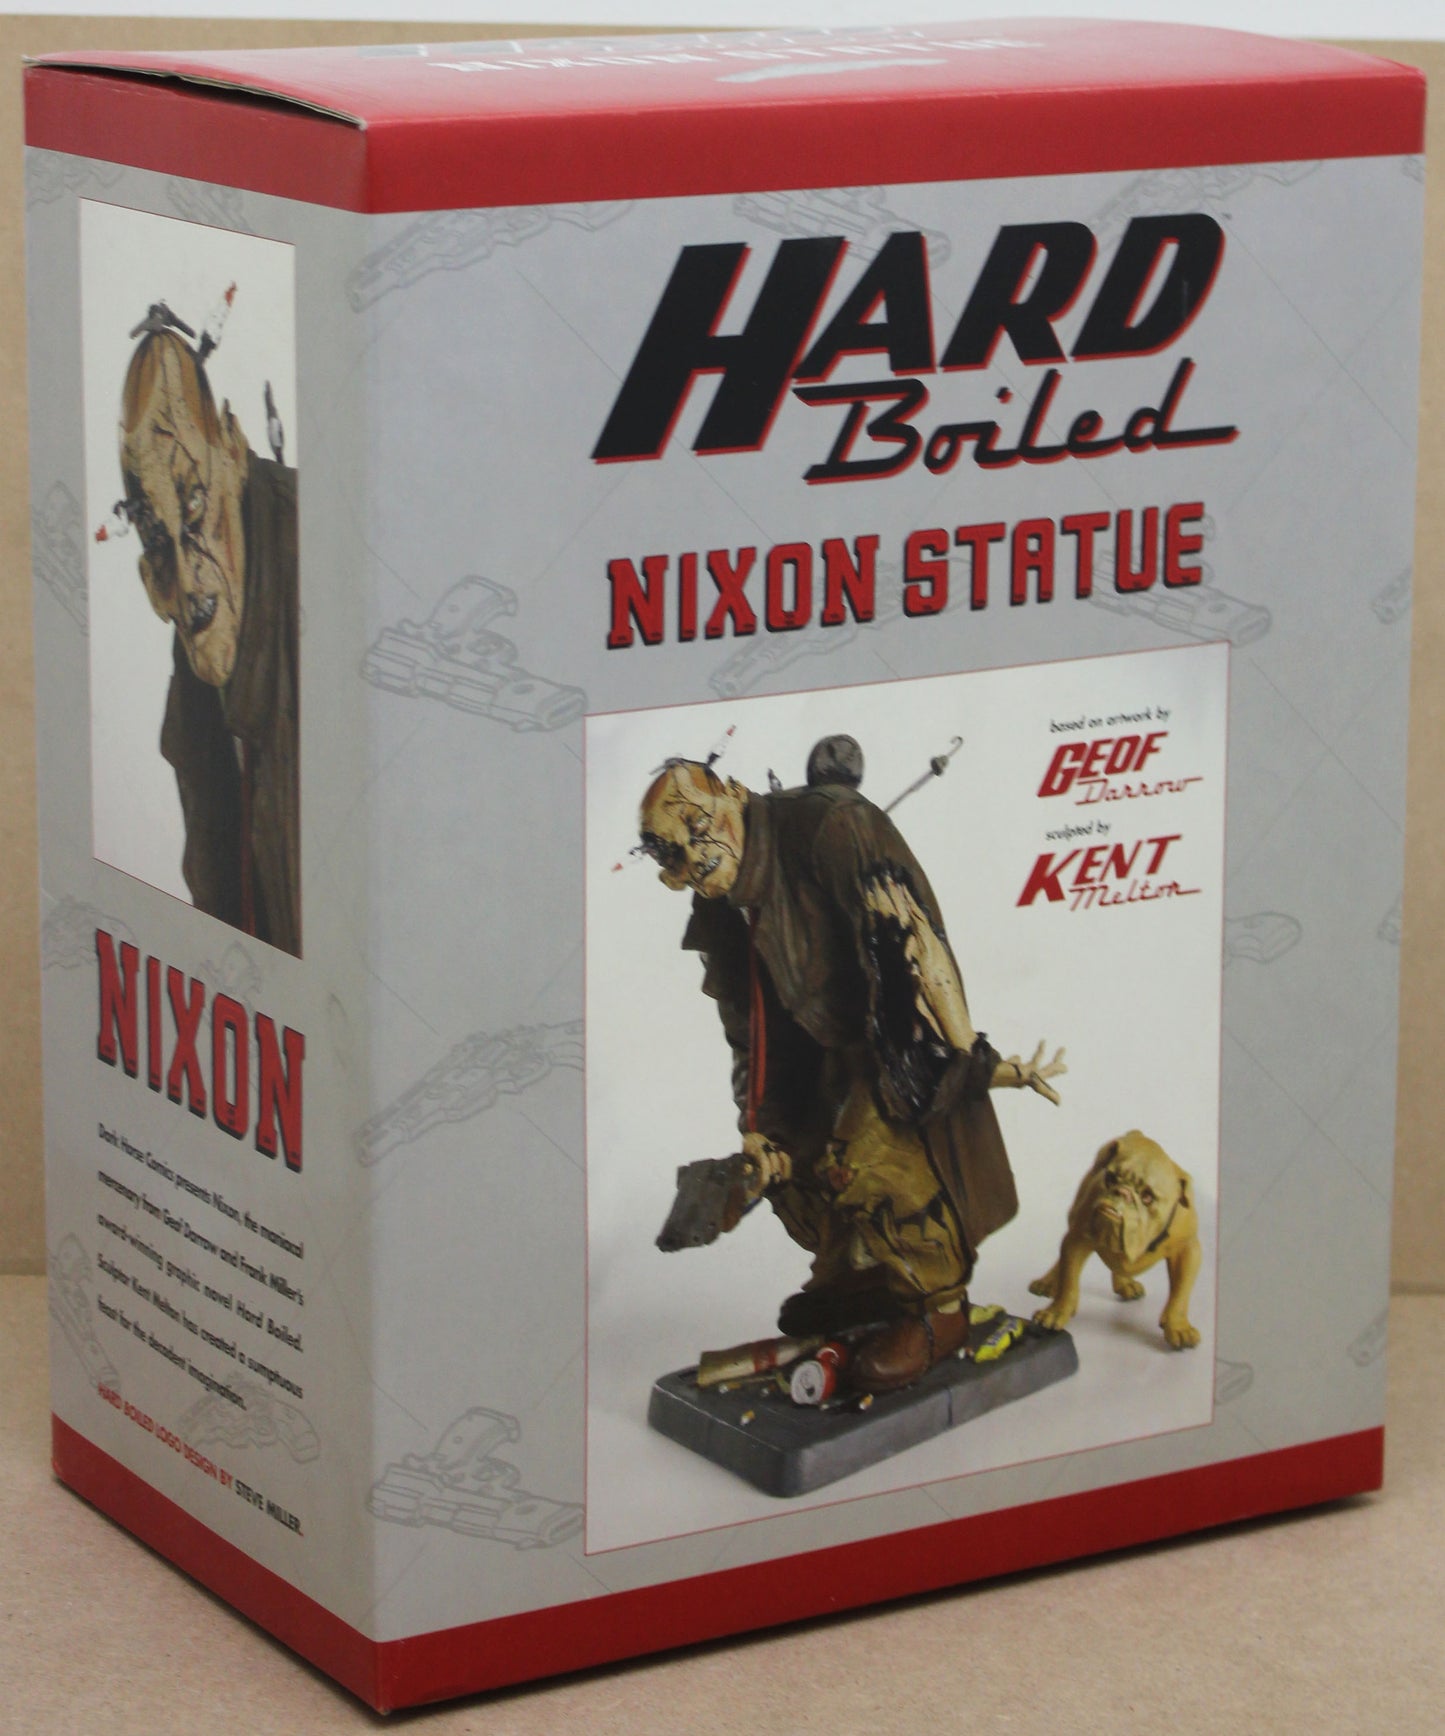 Hard Boiled Statue Nixon